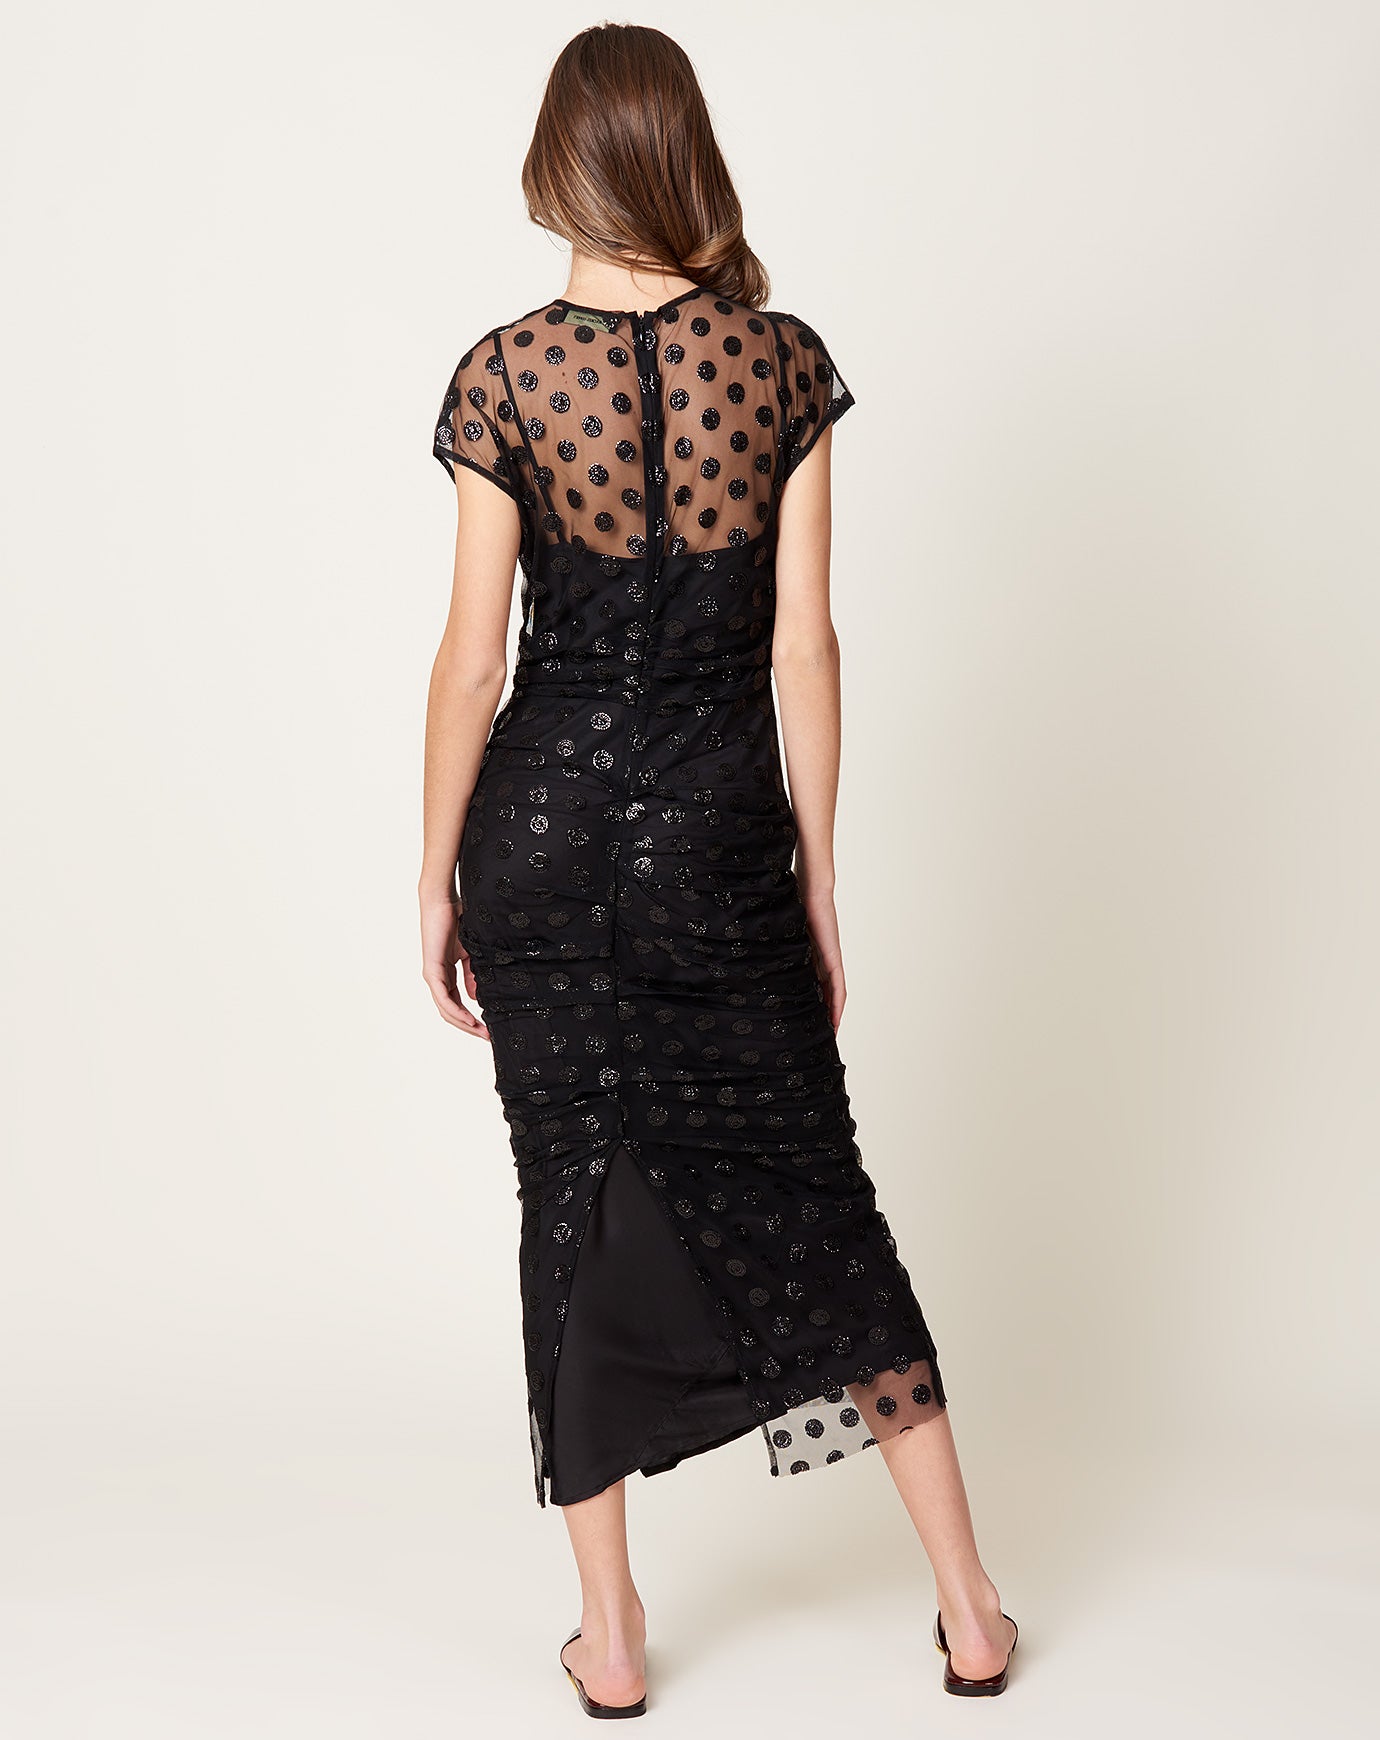 Rachel Comey Delorate Dress in Black Sequin Dots Tulle